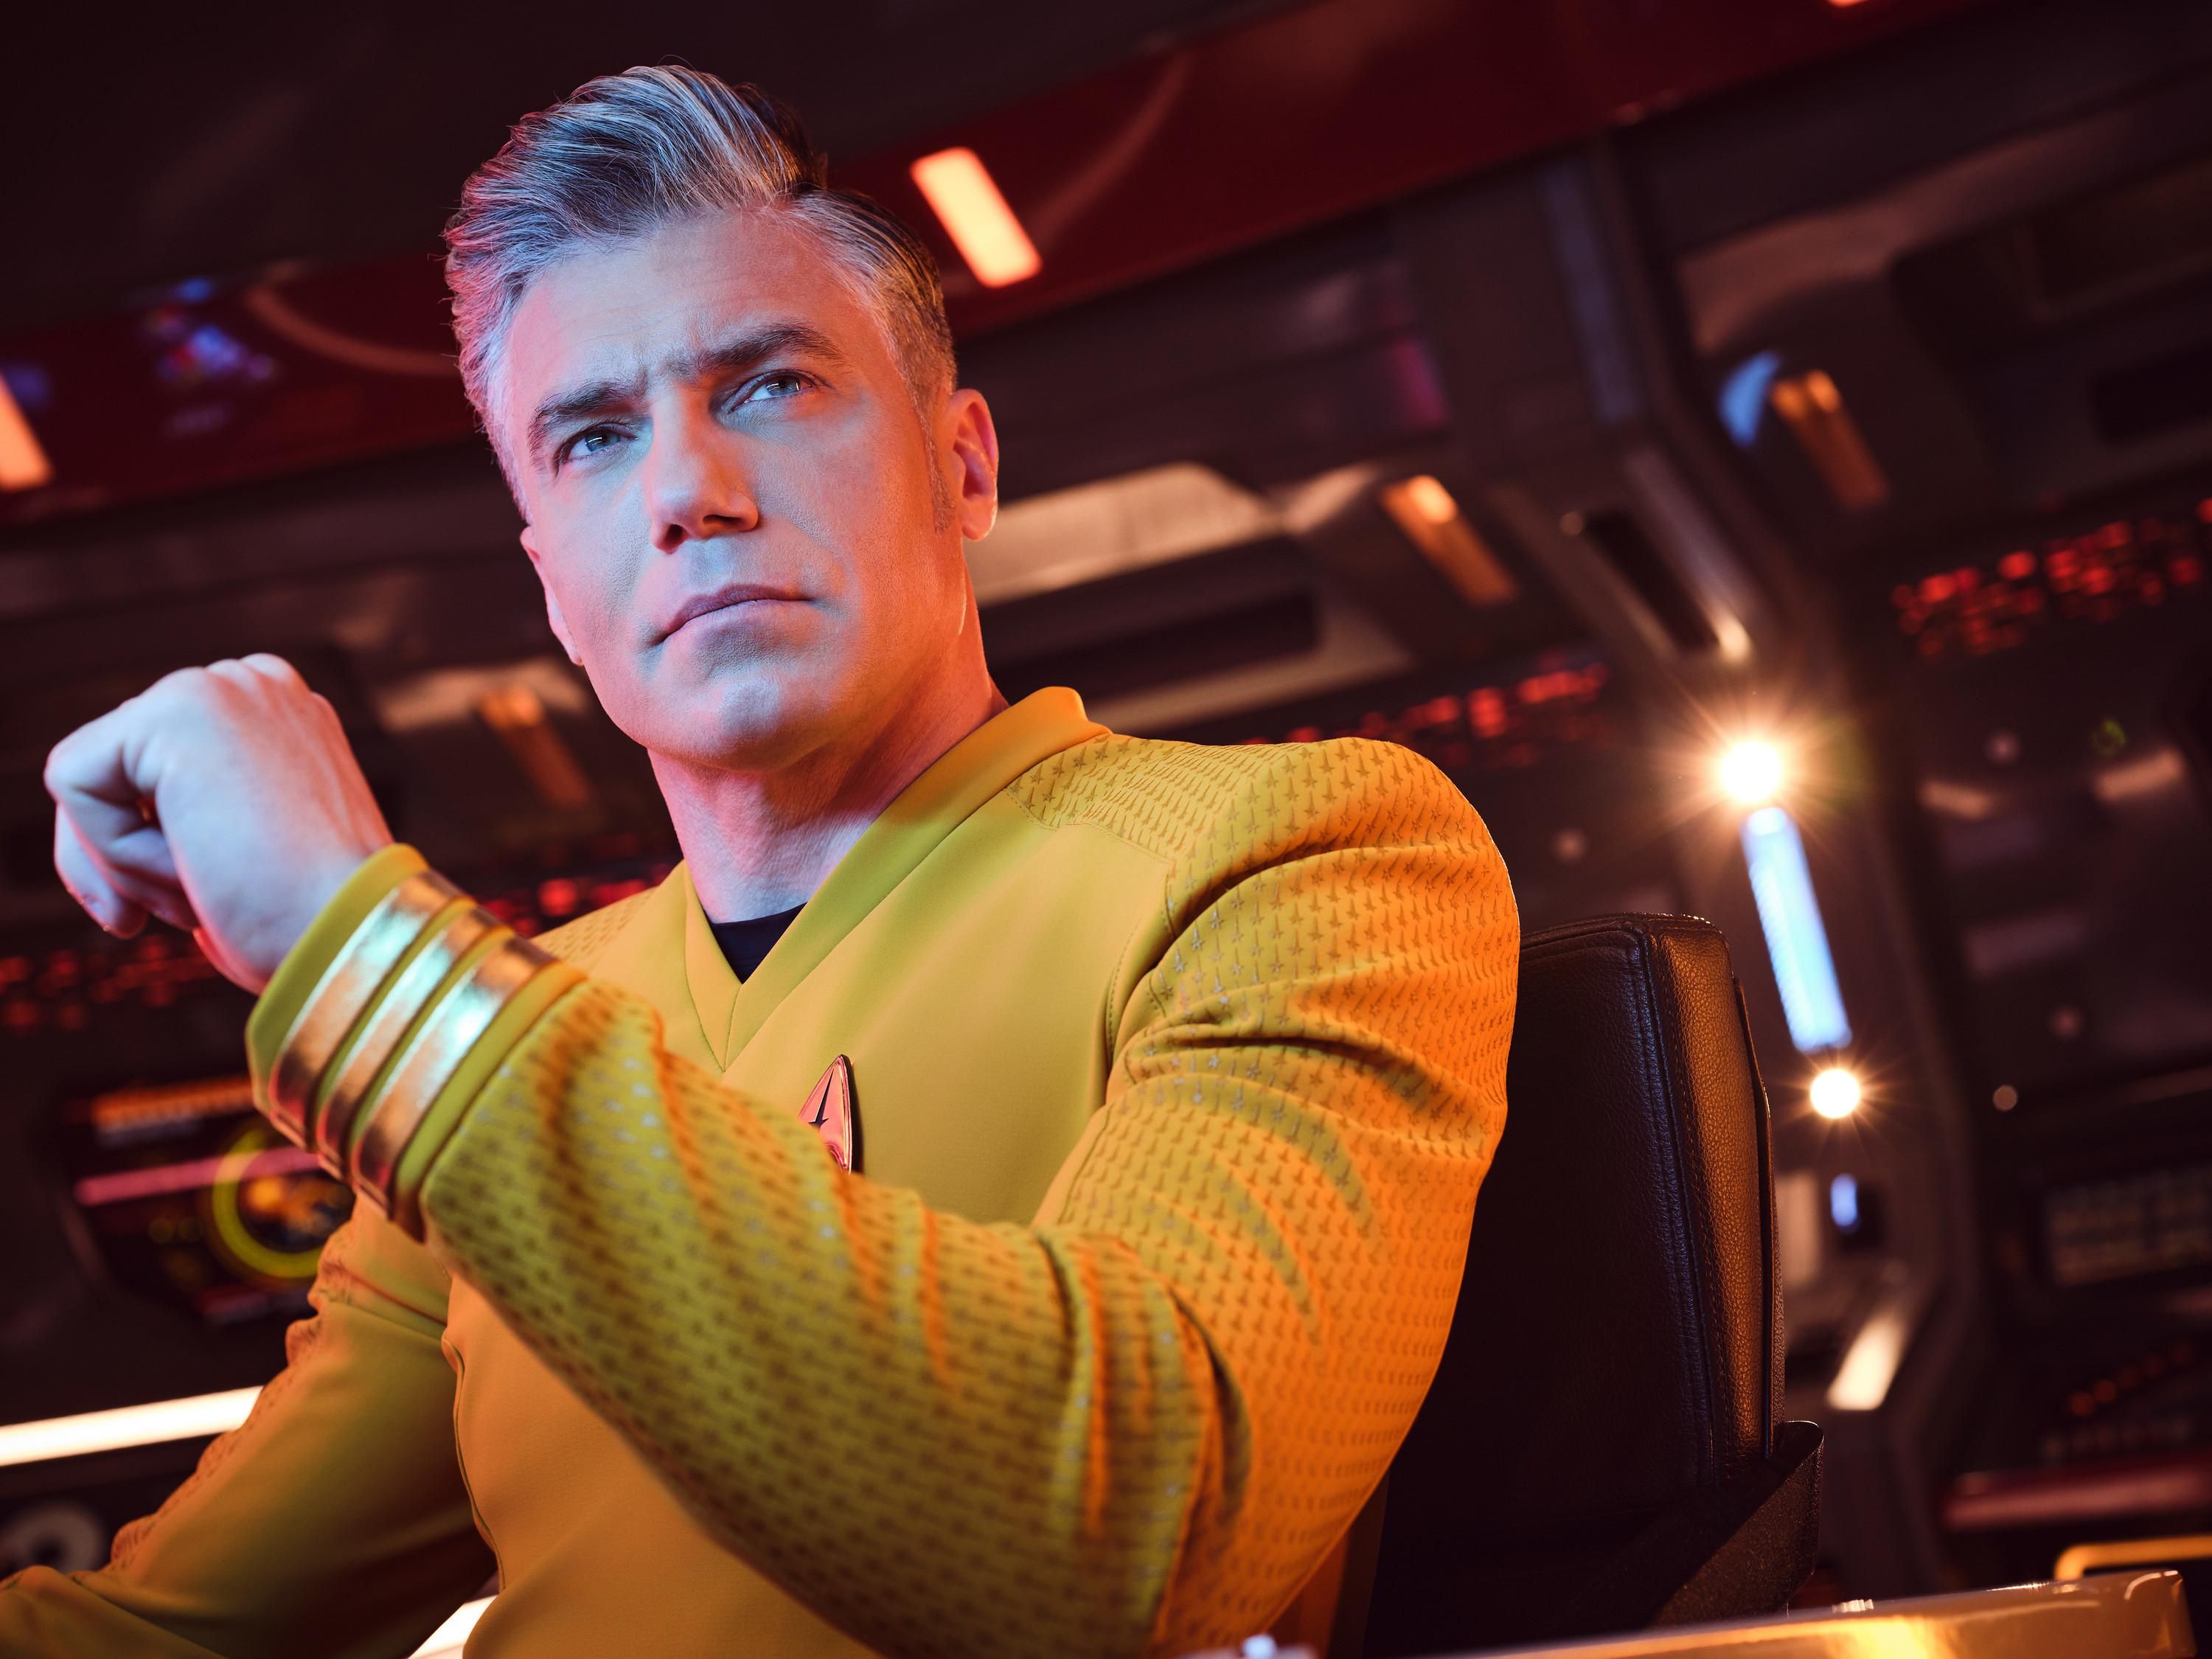 Pike in his yellow Star Trek uniform looking distinguished